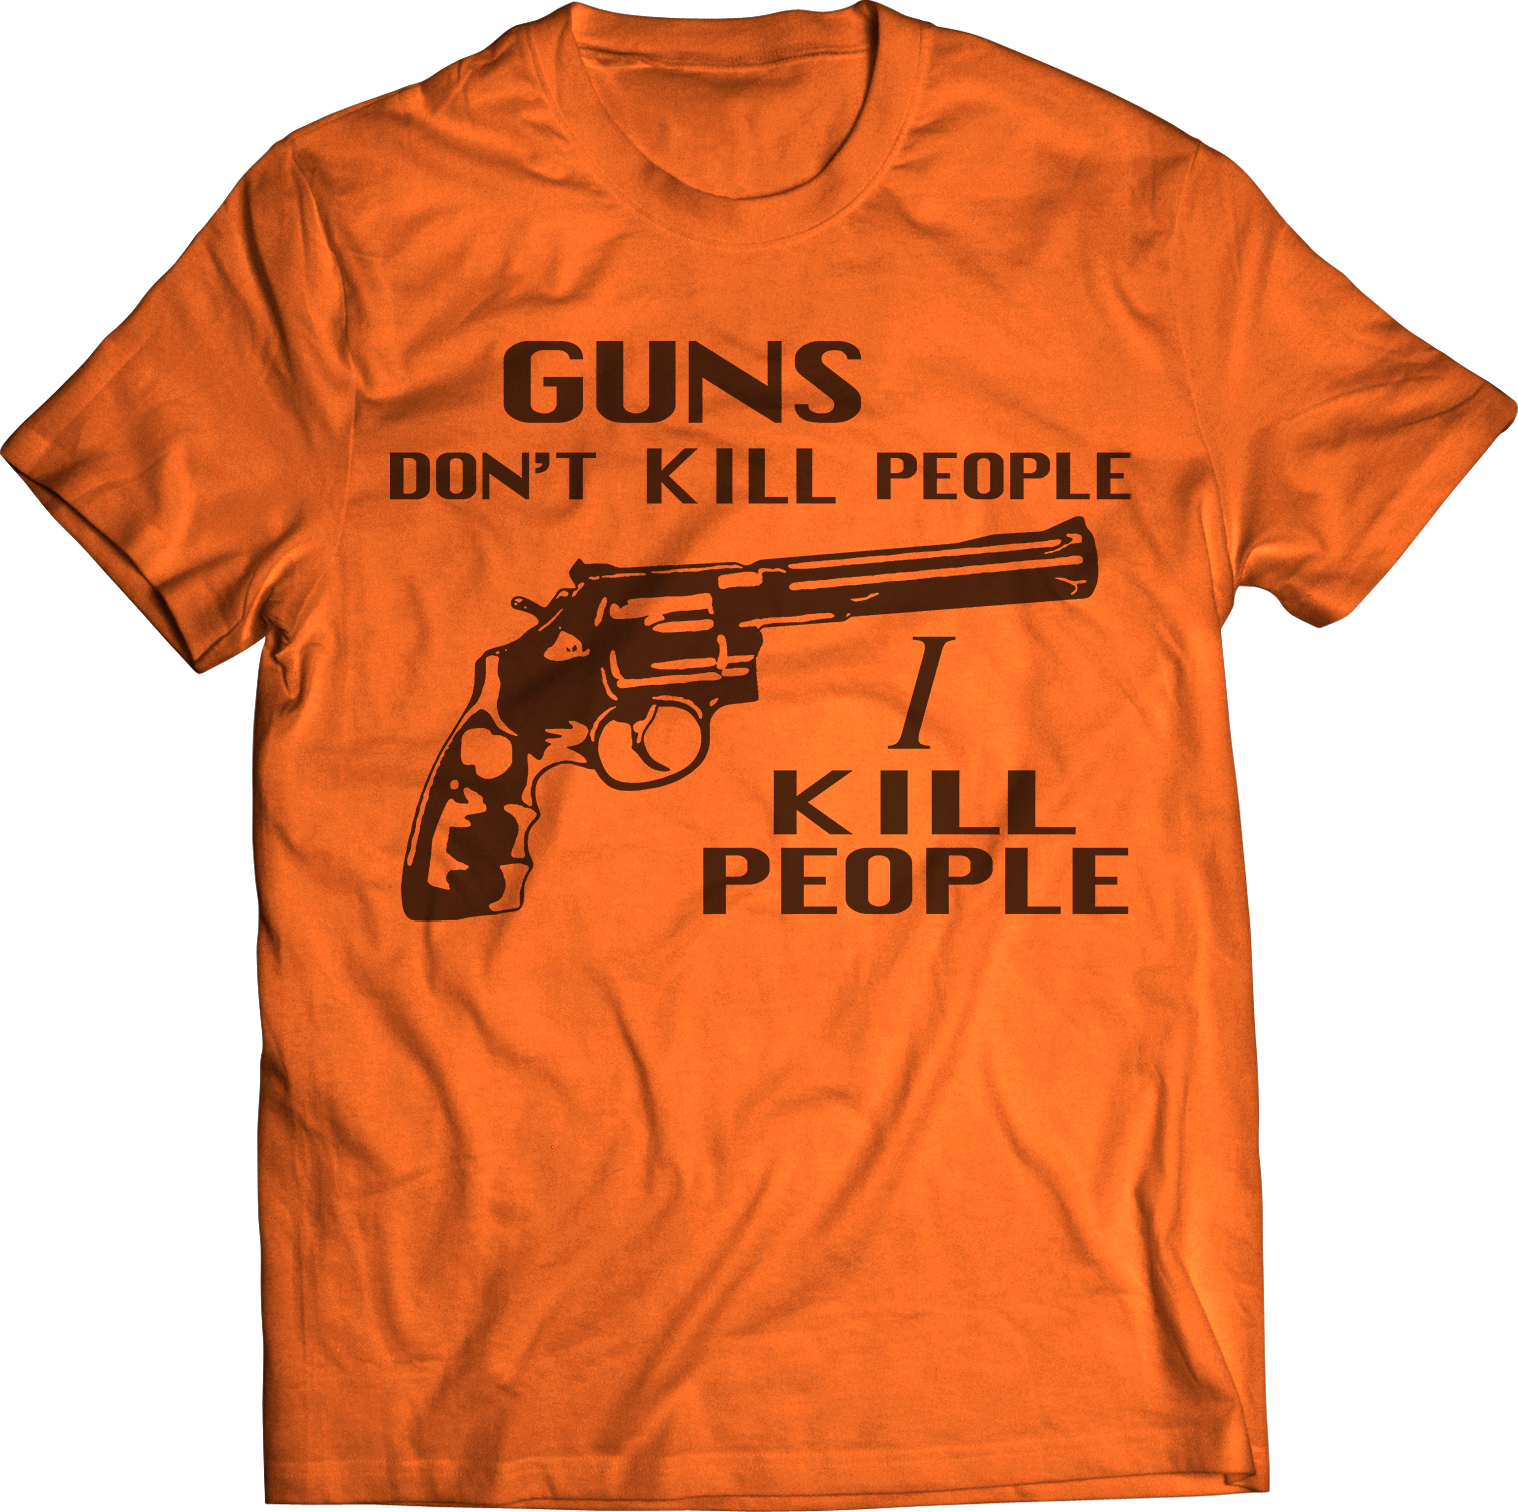 ATOM AGE "GUNS DON'T KILL PEOPLE, I KILL PEOPLE" T-SHIRT